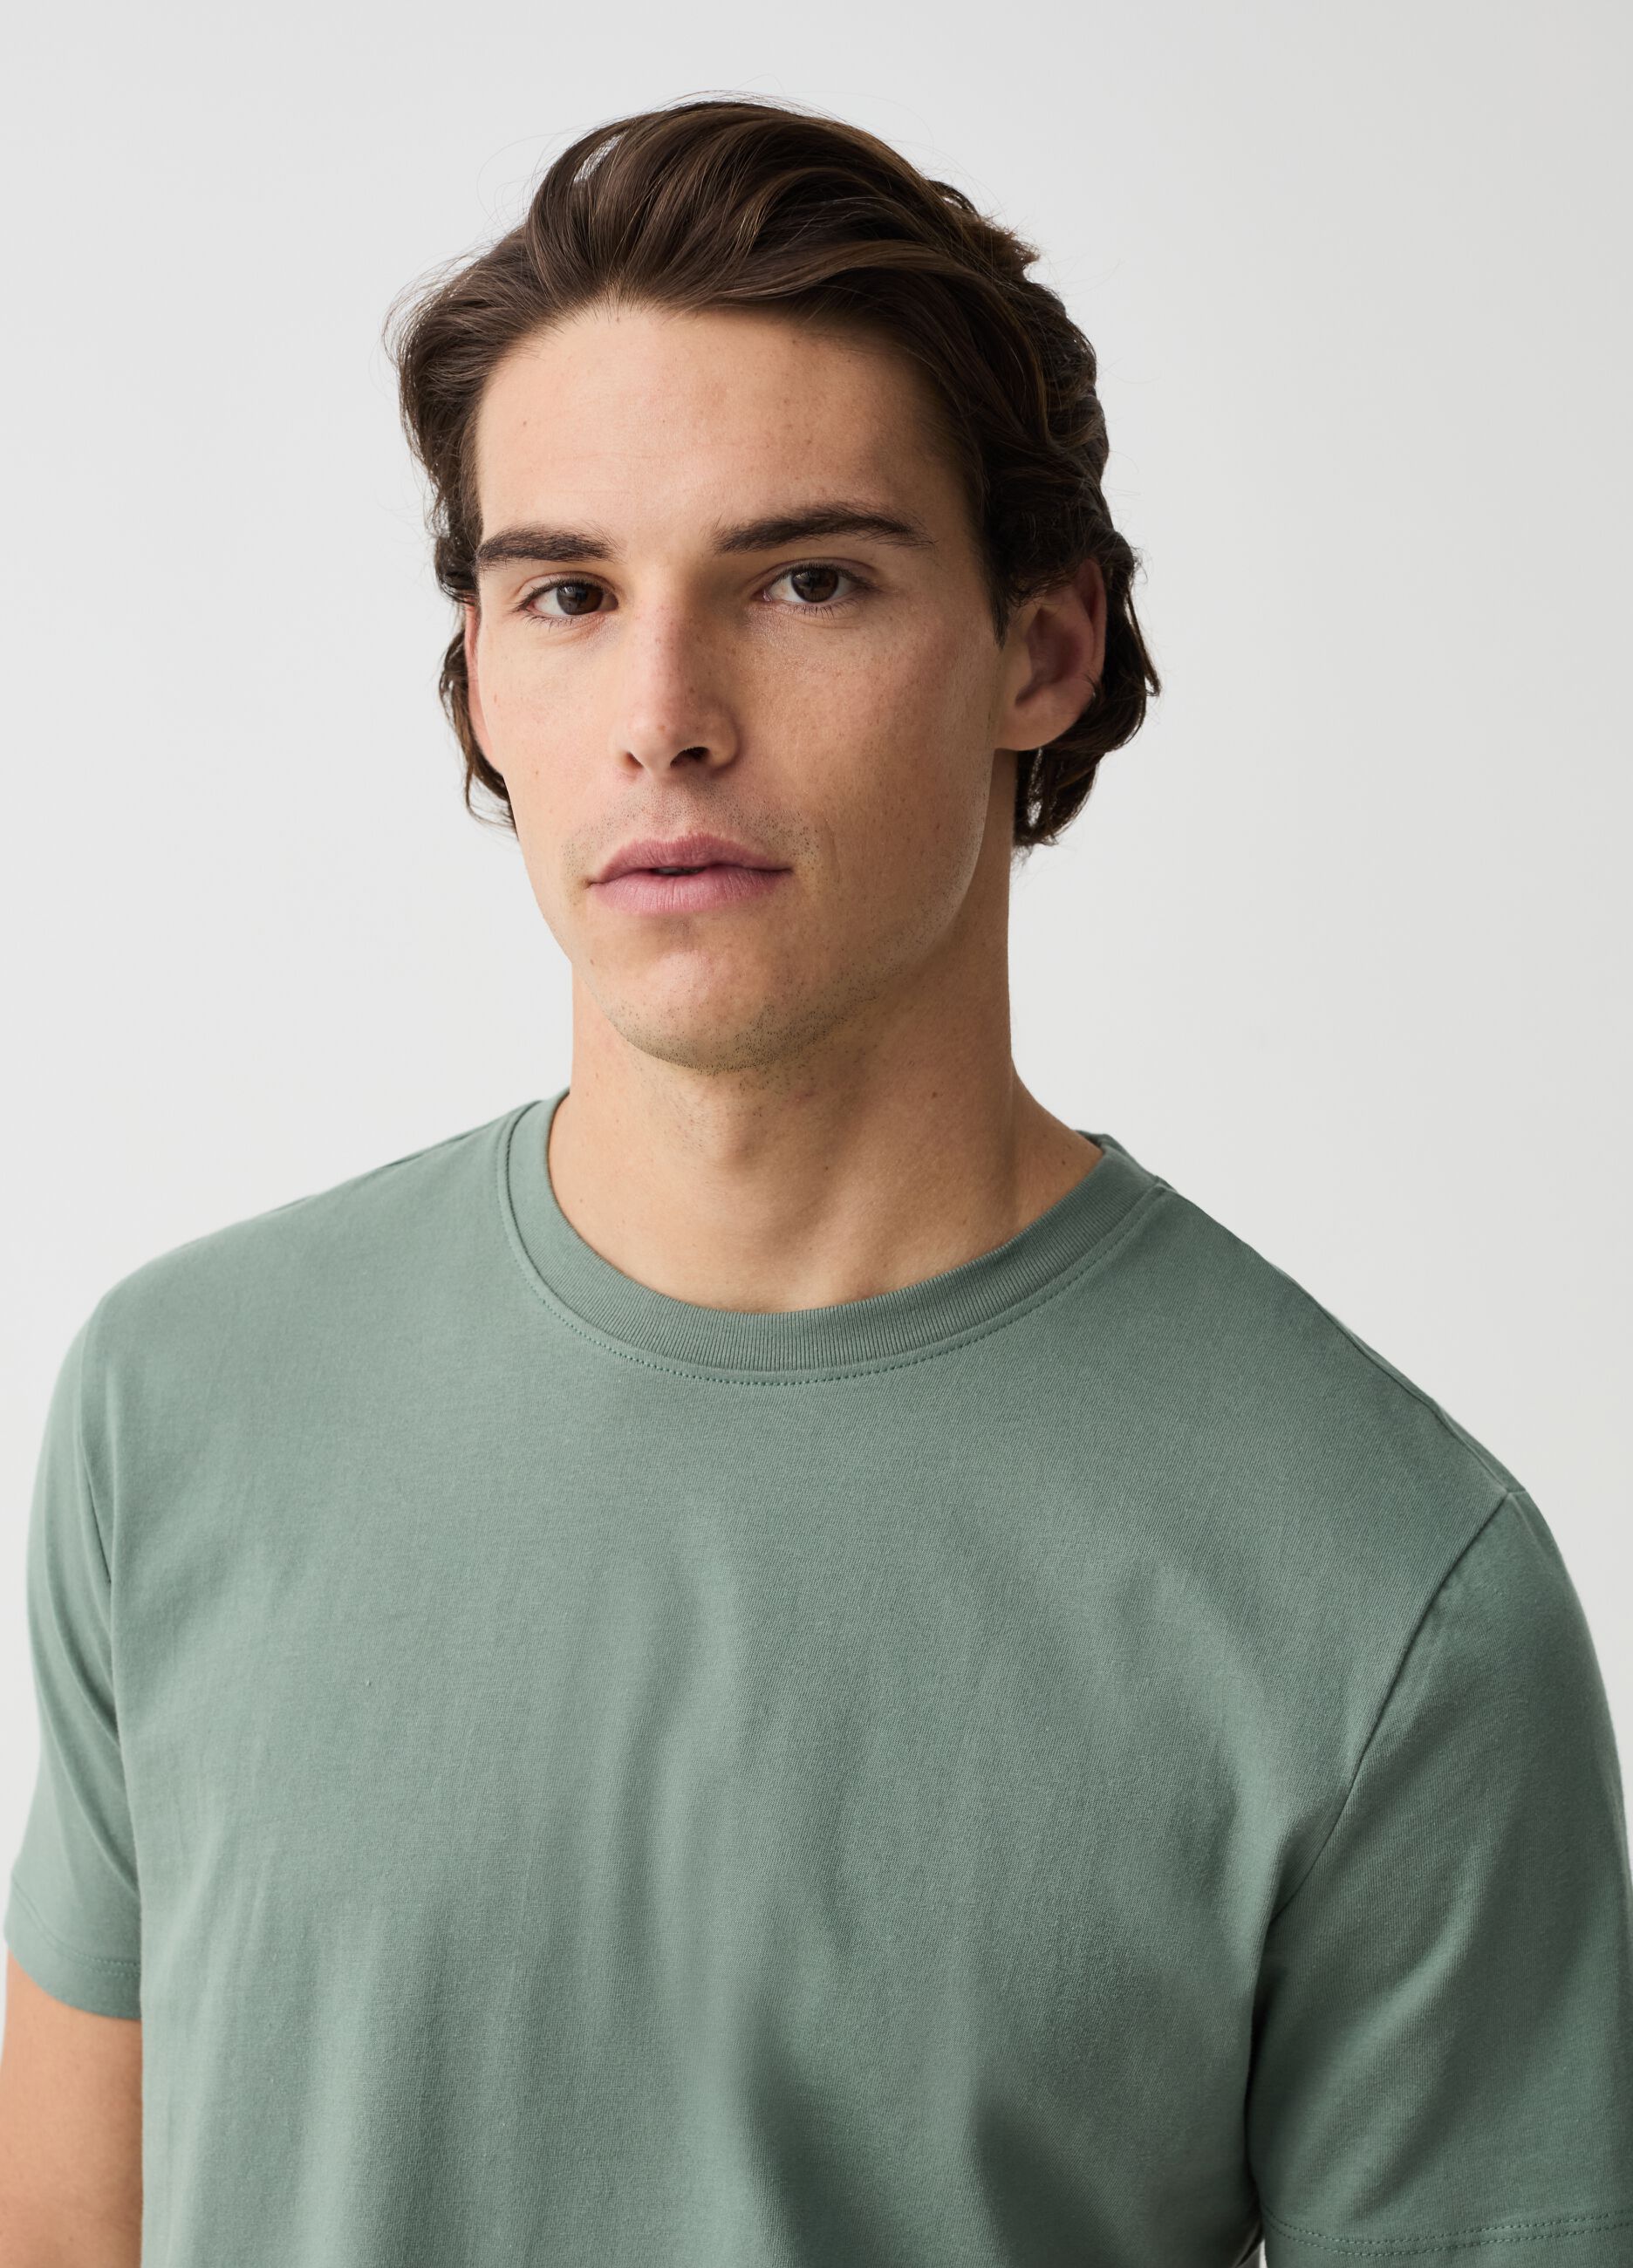 Camiseta de algodón orgánico cuello redondo